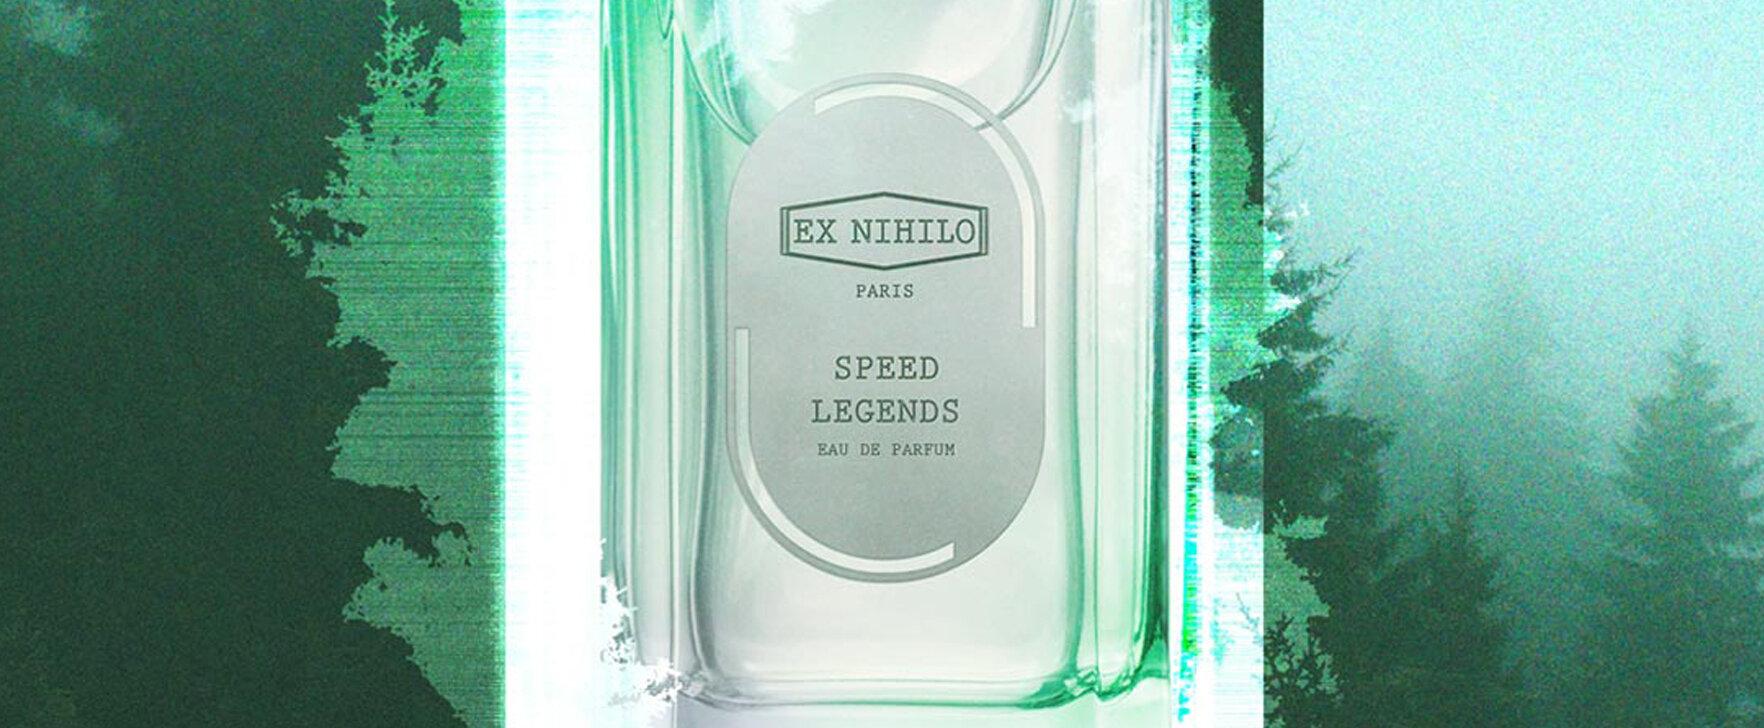 "Speed Legend" - Ex Nihilo unites history and modernity